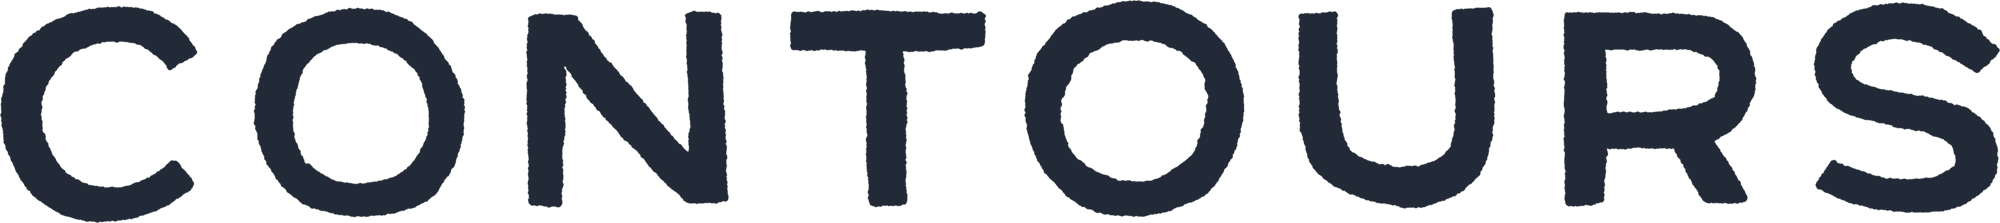 Contours Logo